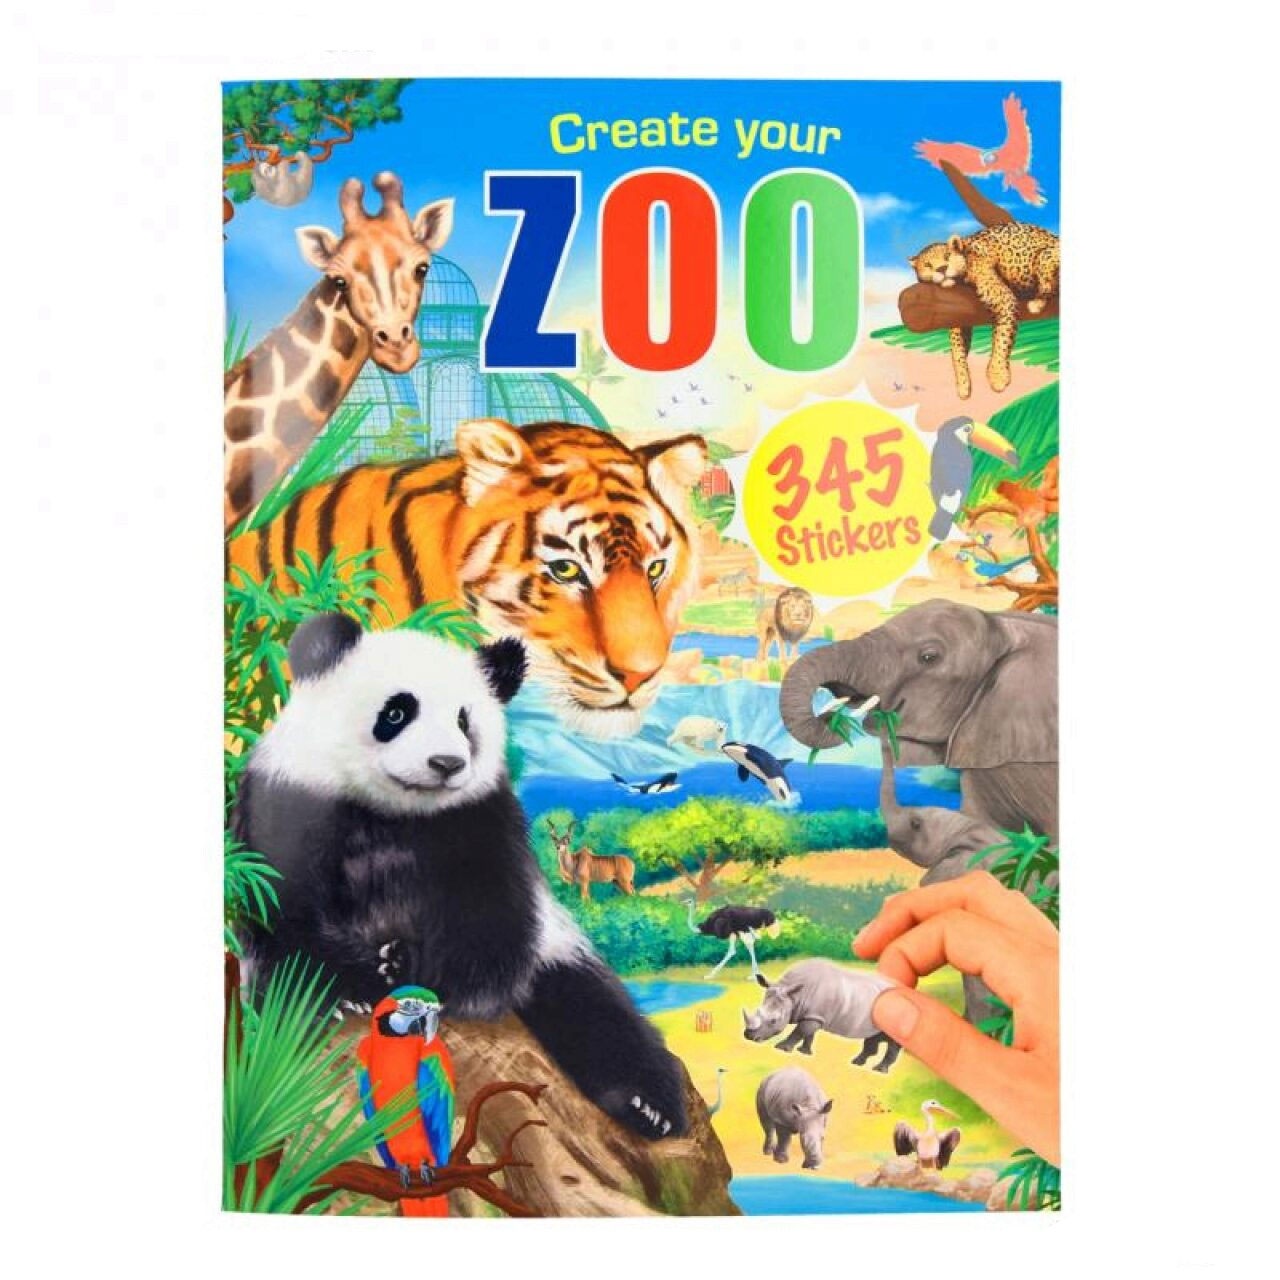 Create your Zoo